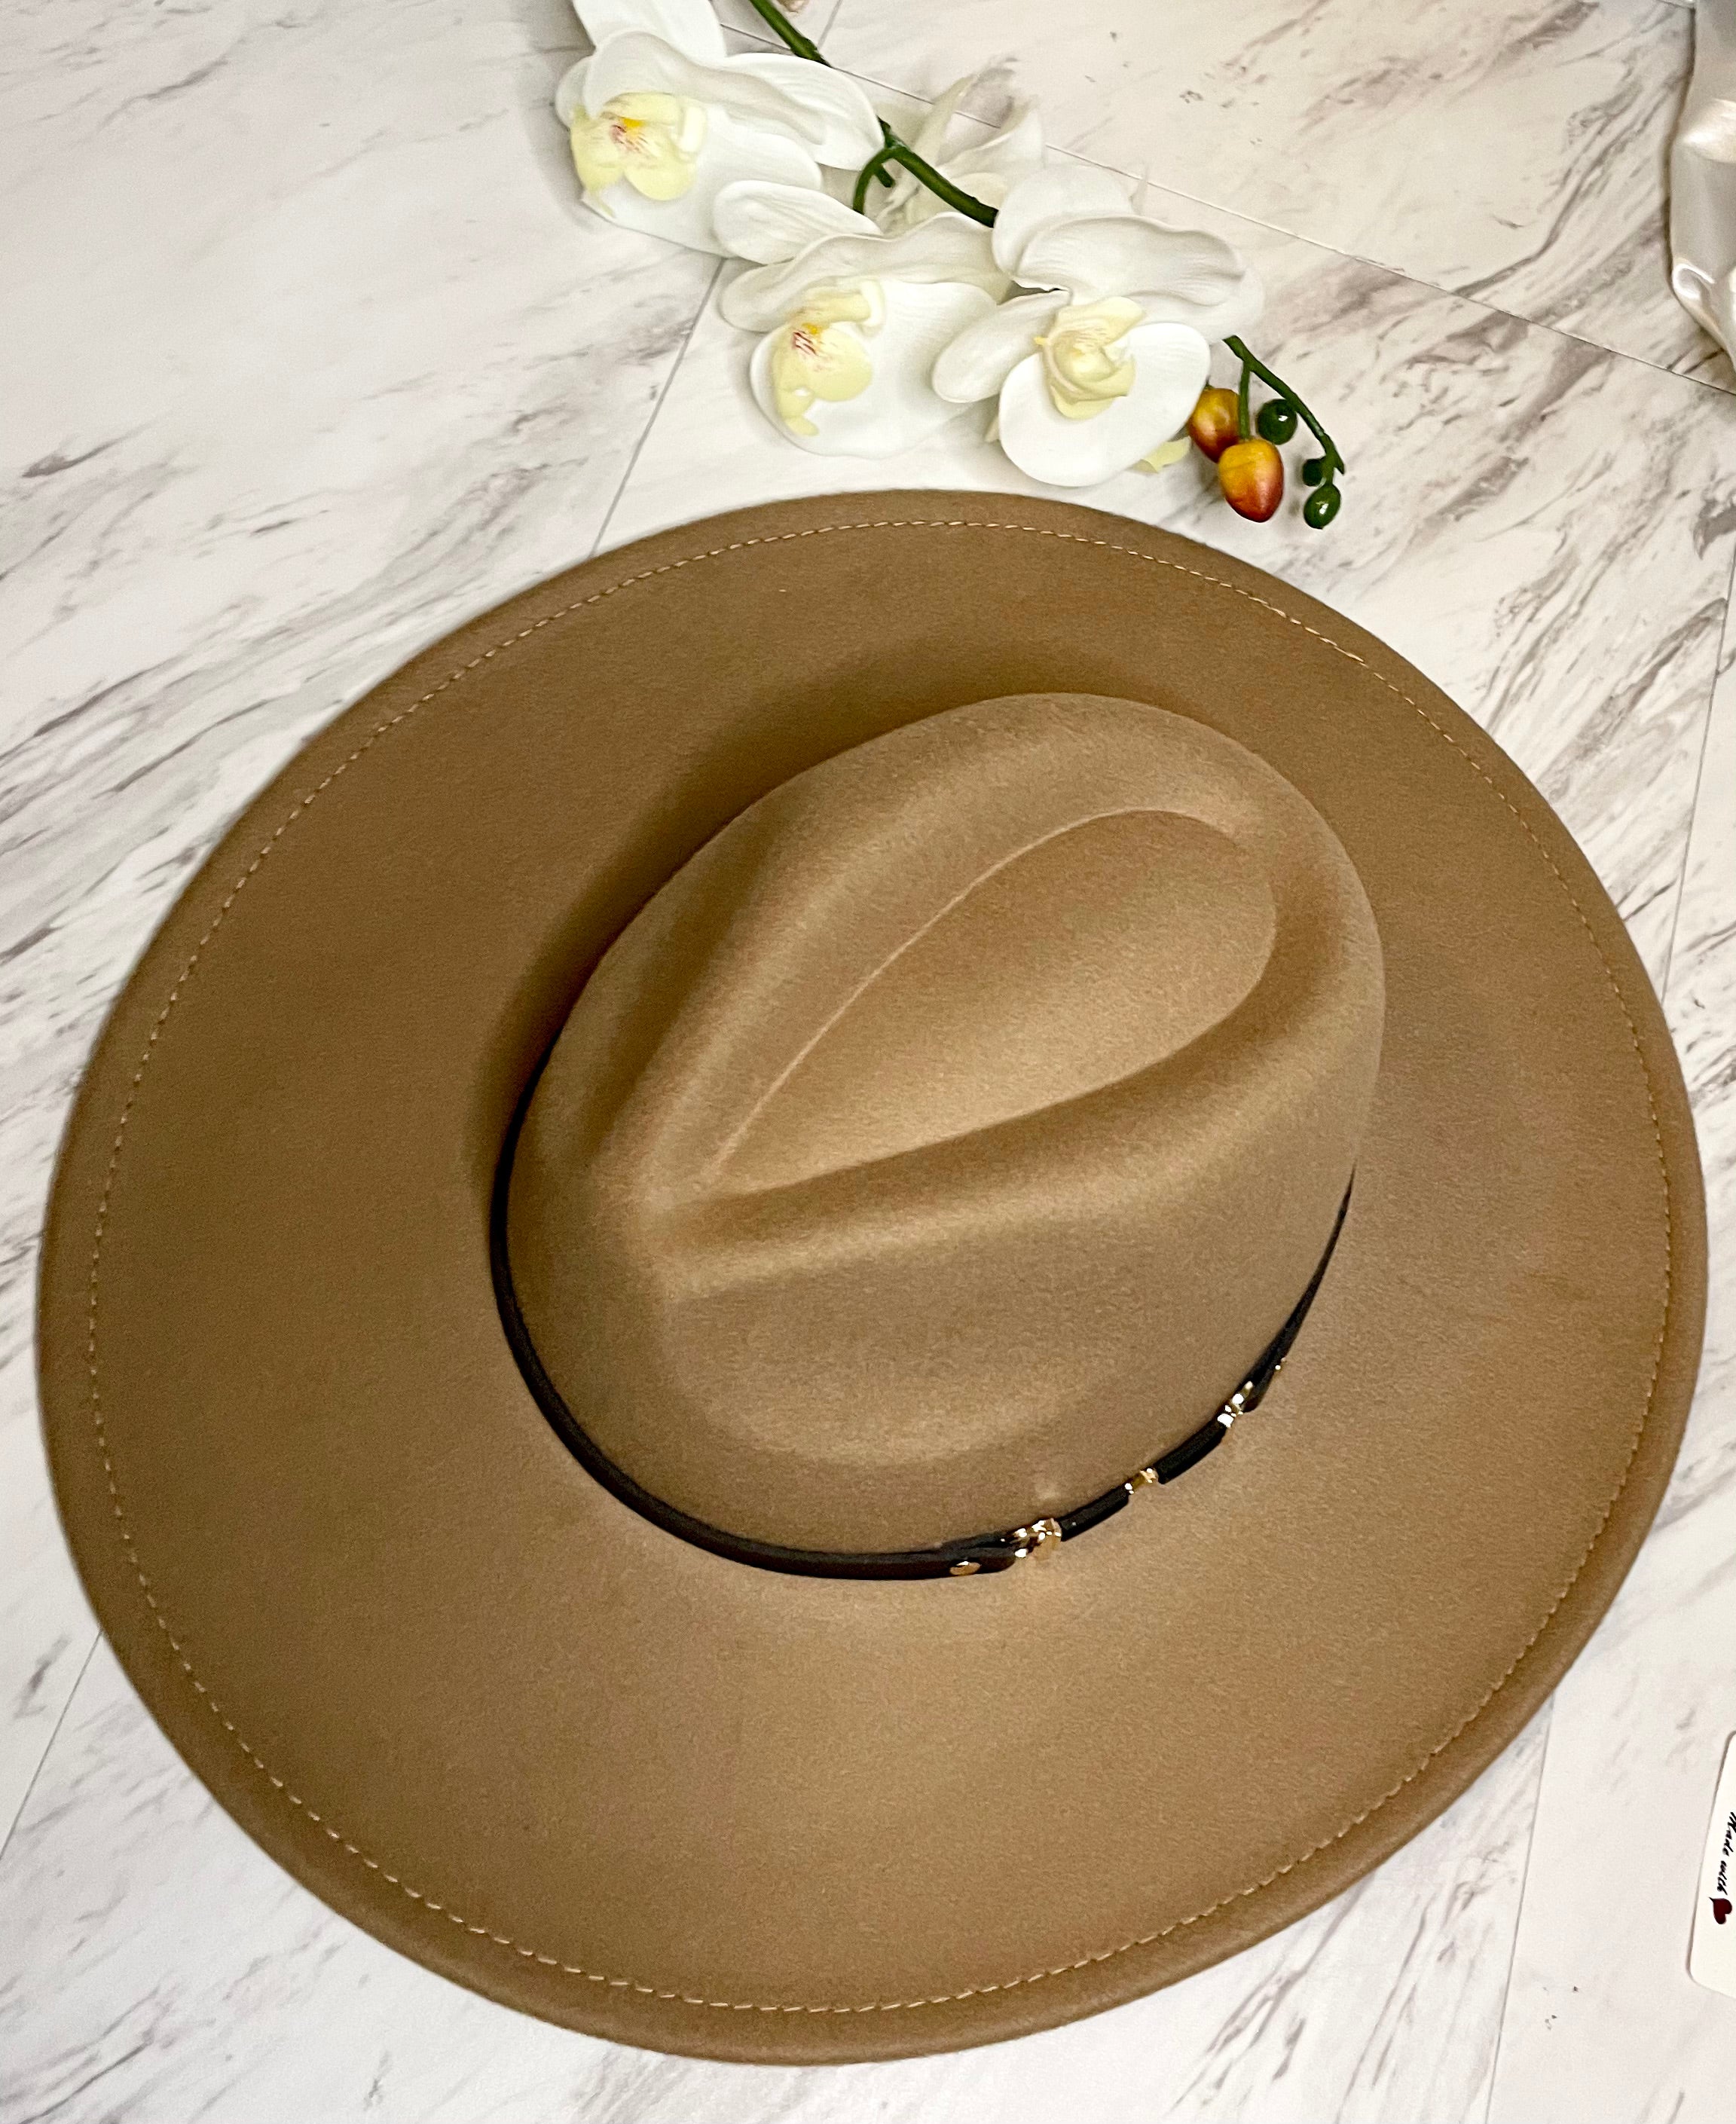 Belt Buckle Fedora Hat - Tan